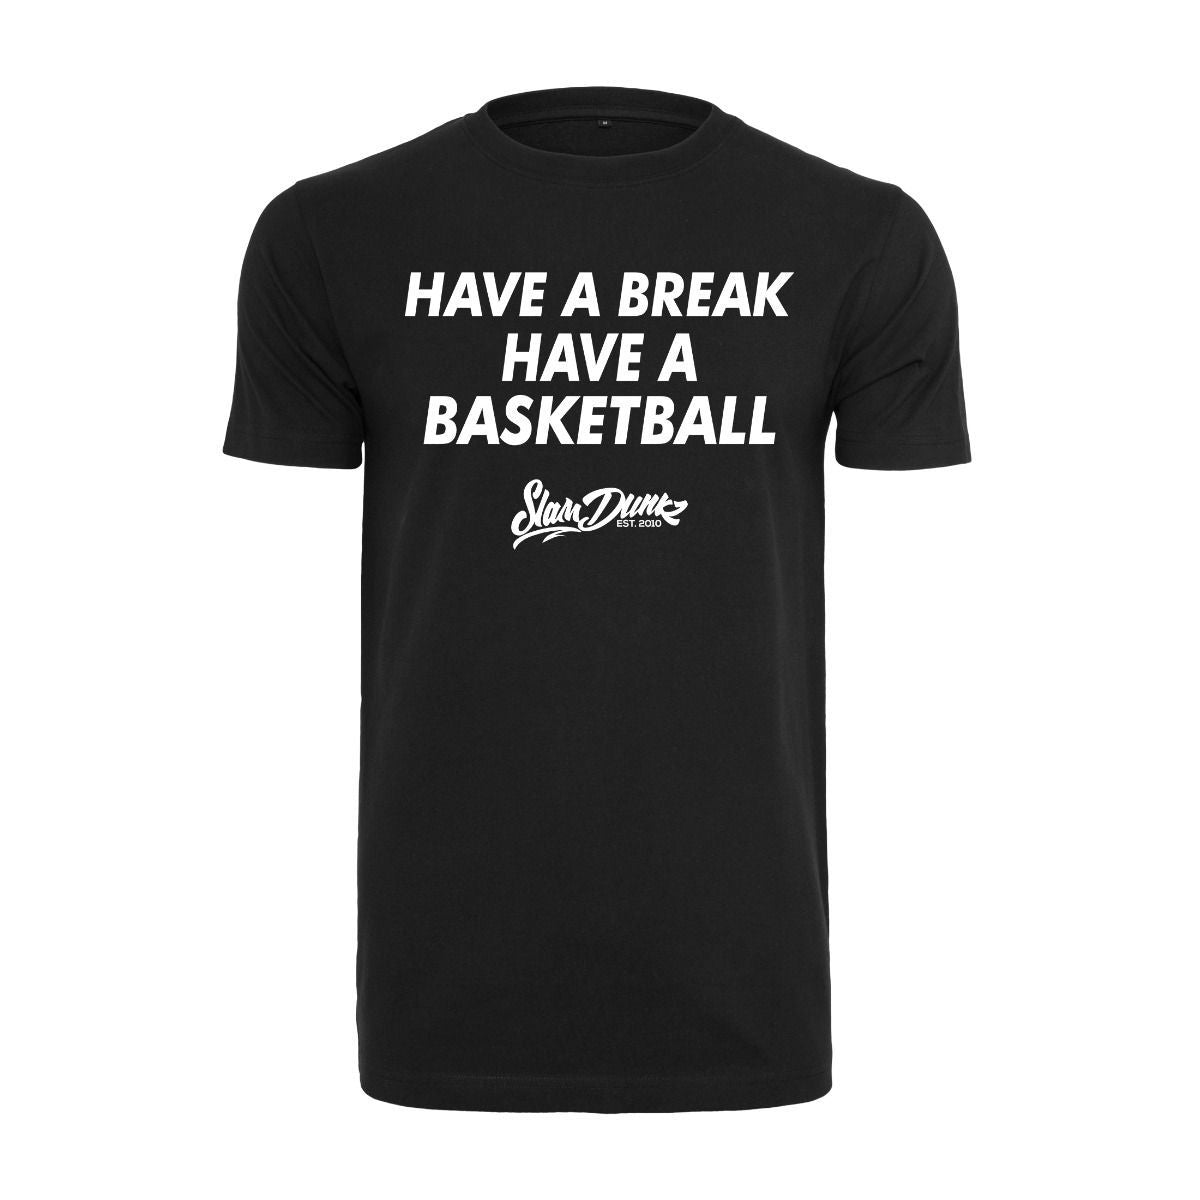 Slamdunkz - Have a break, have a basketball shirt zwart